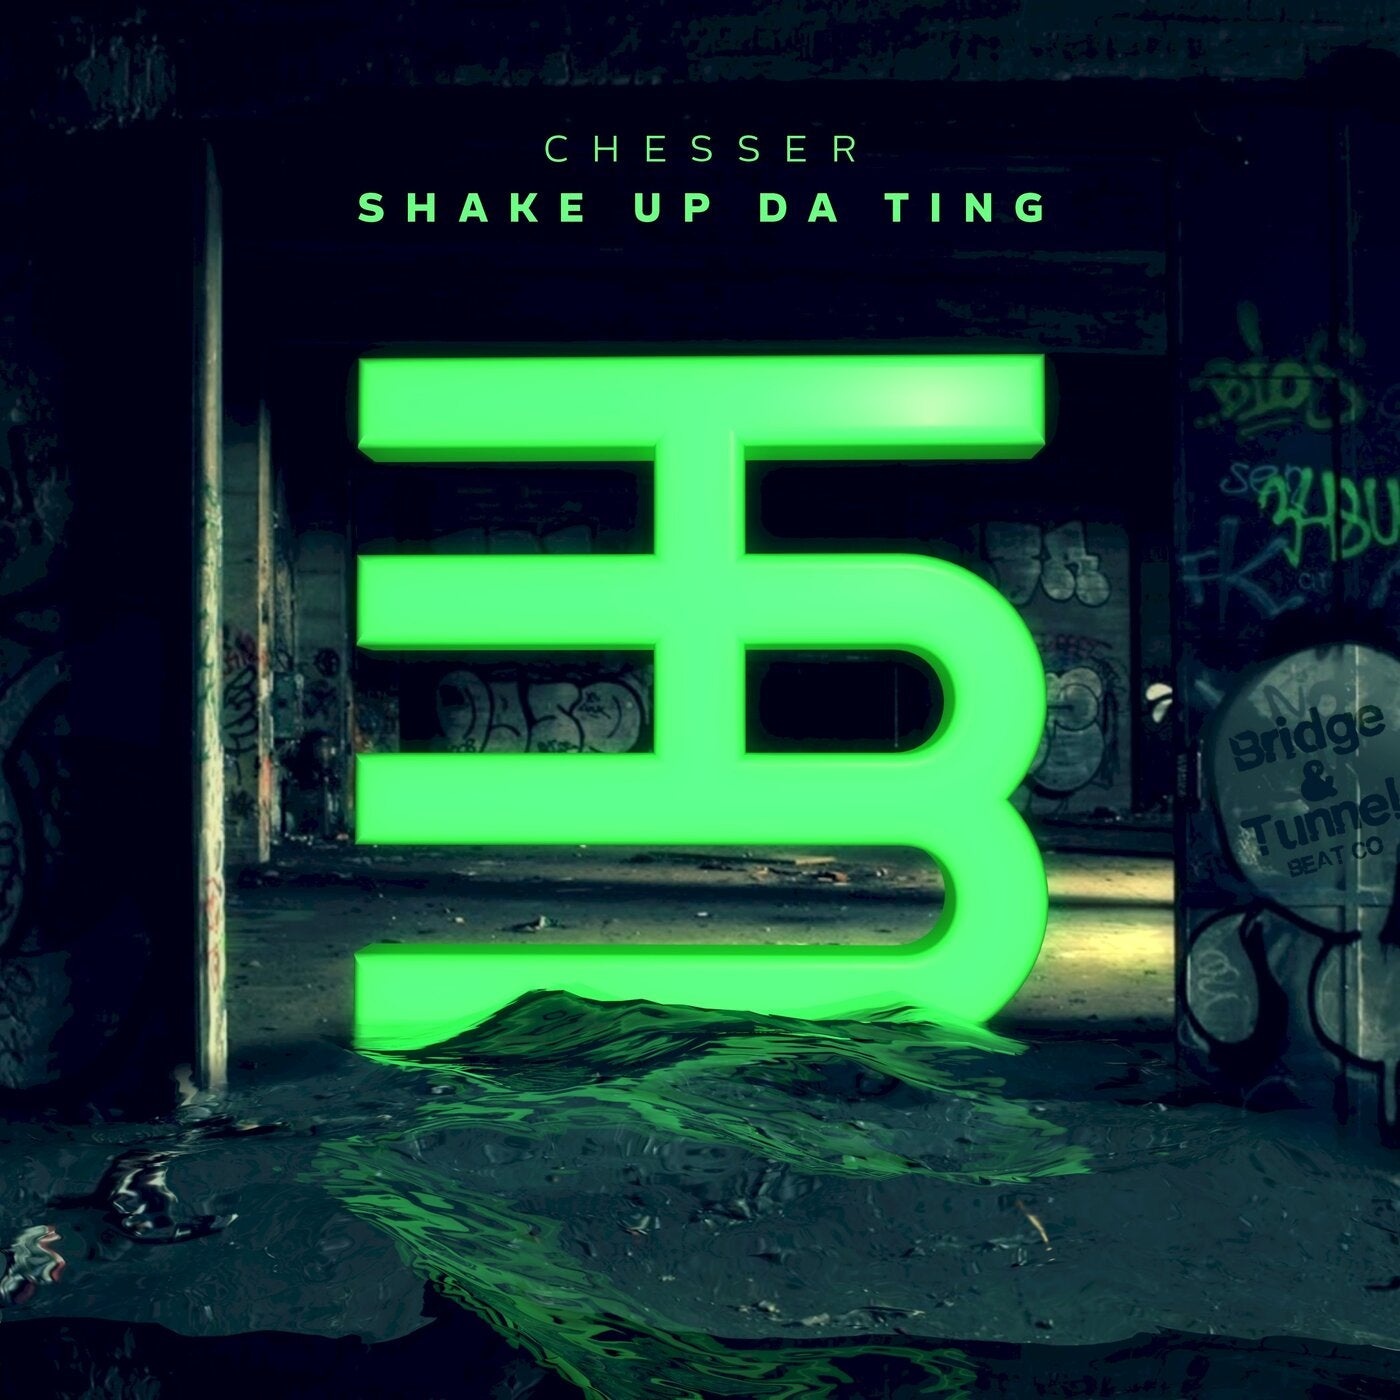 CHESSER - Shake Up Da Ting [BTBC046]